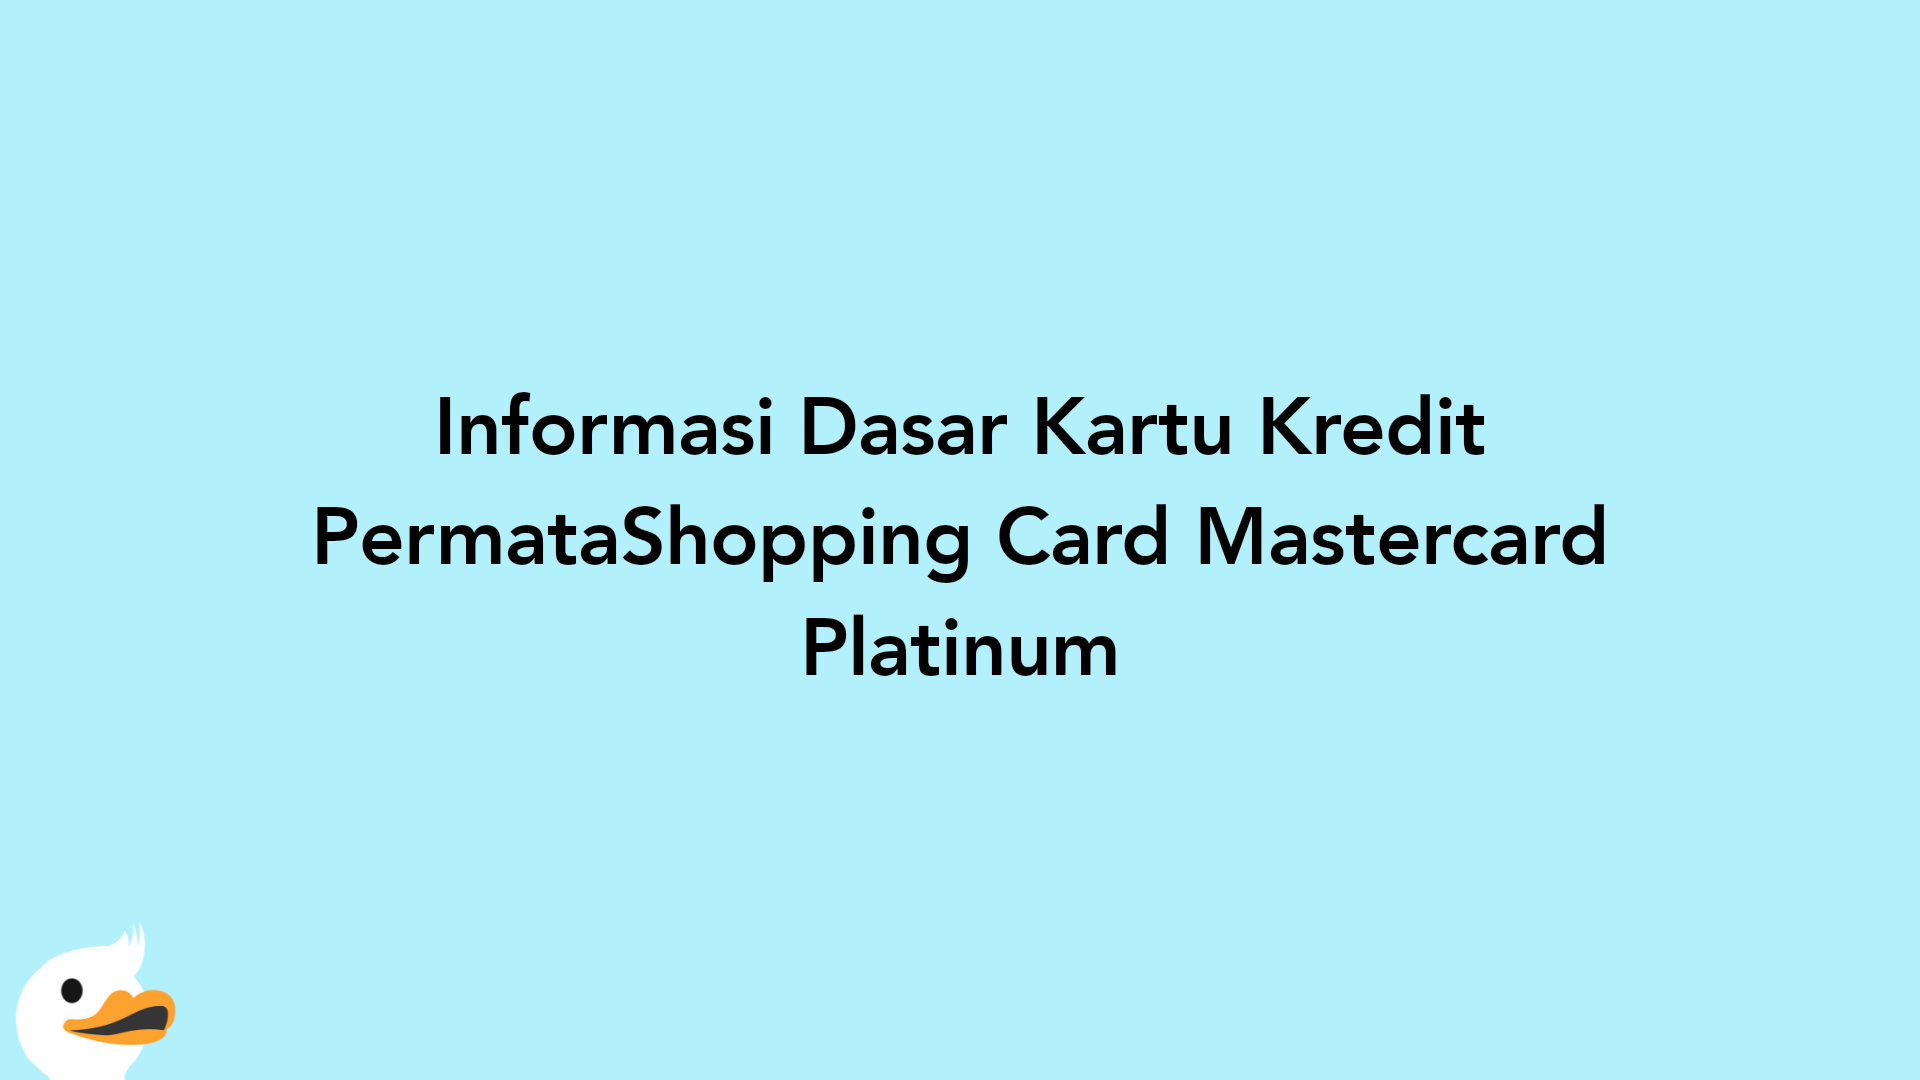 Informasi Dasar Kartu Kredit PermataShopping Card Mastercard Platinum